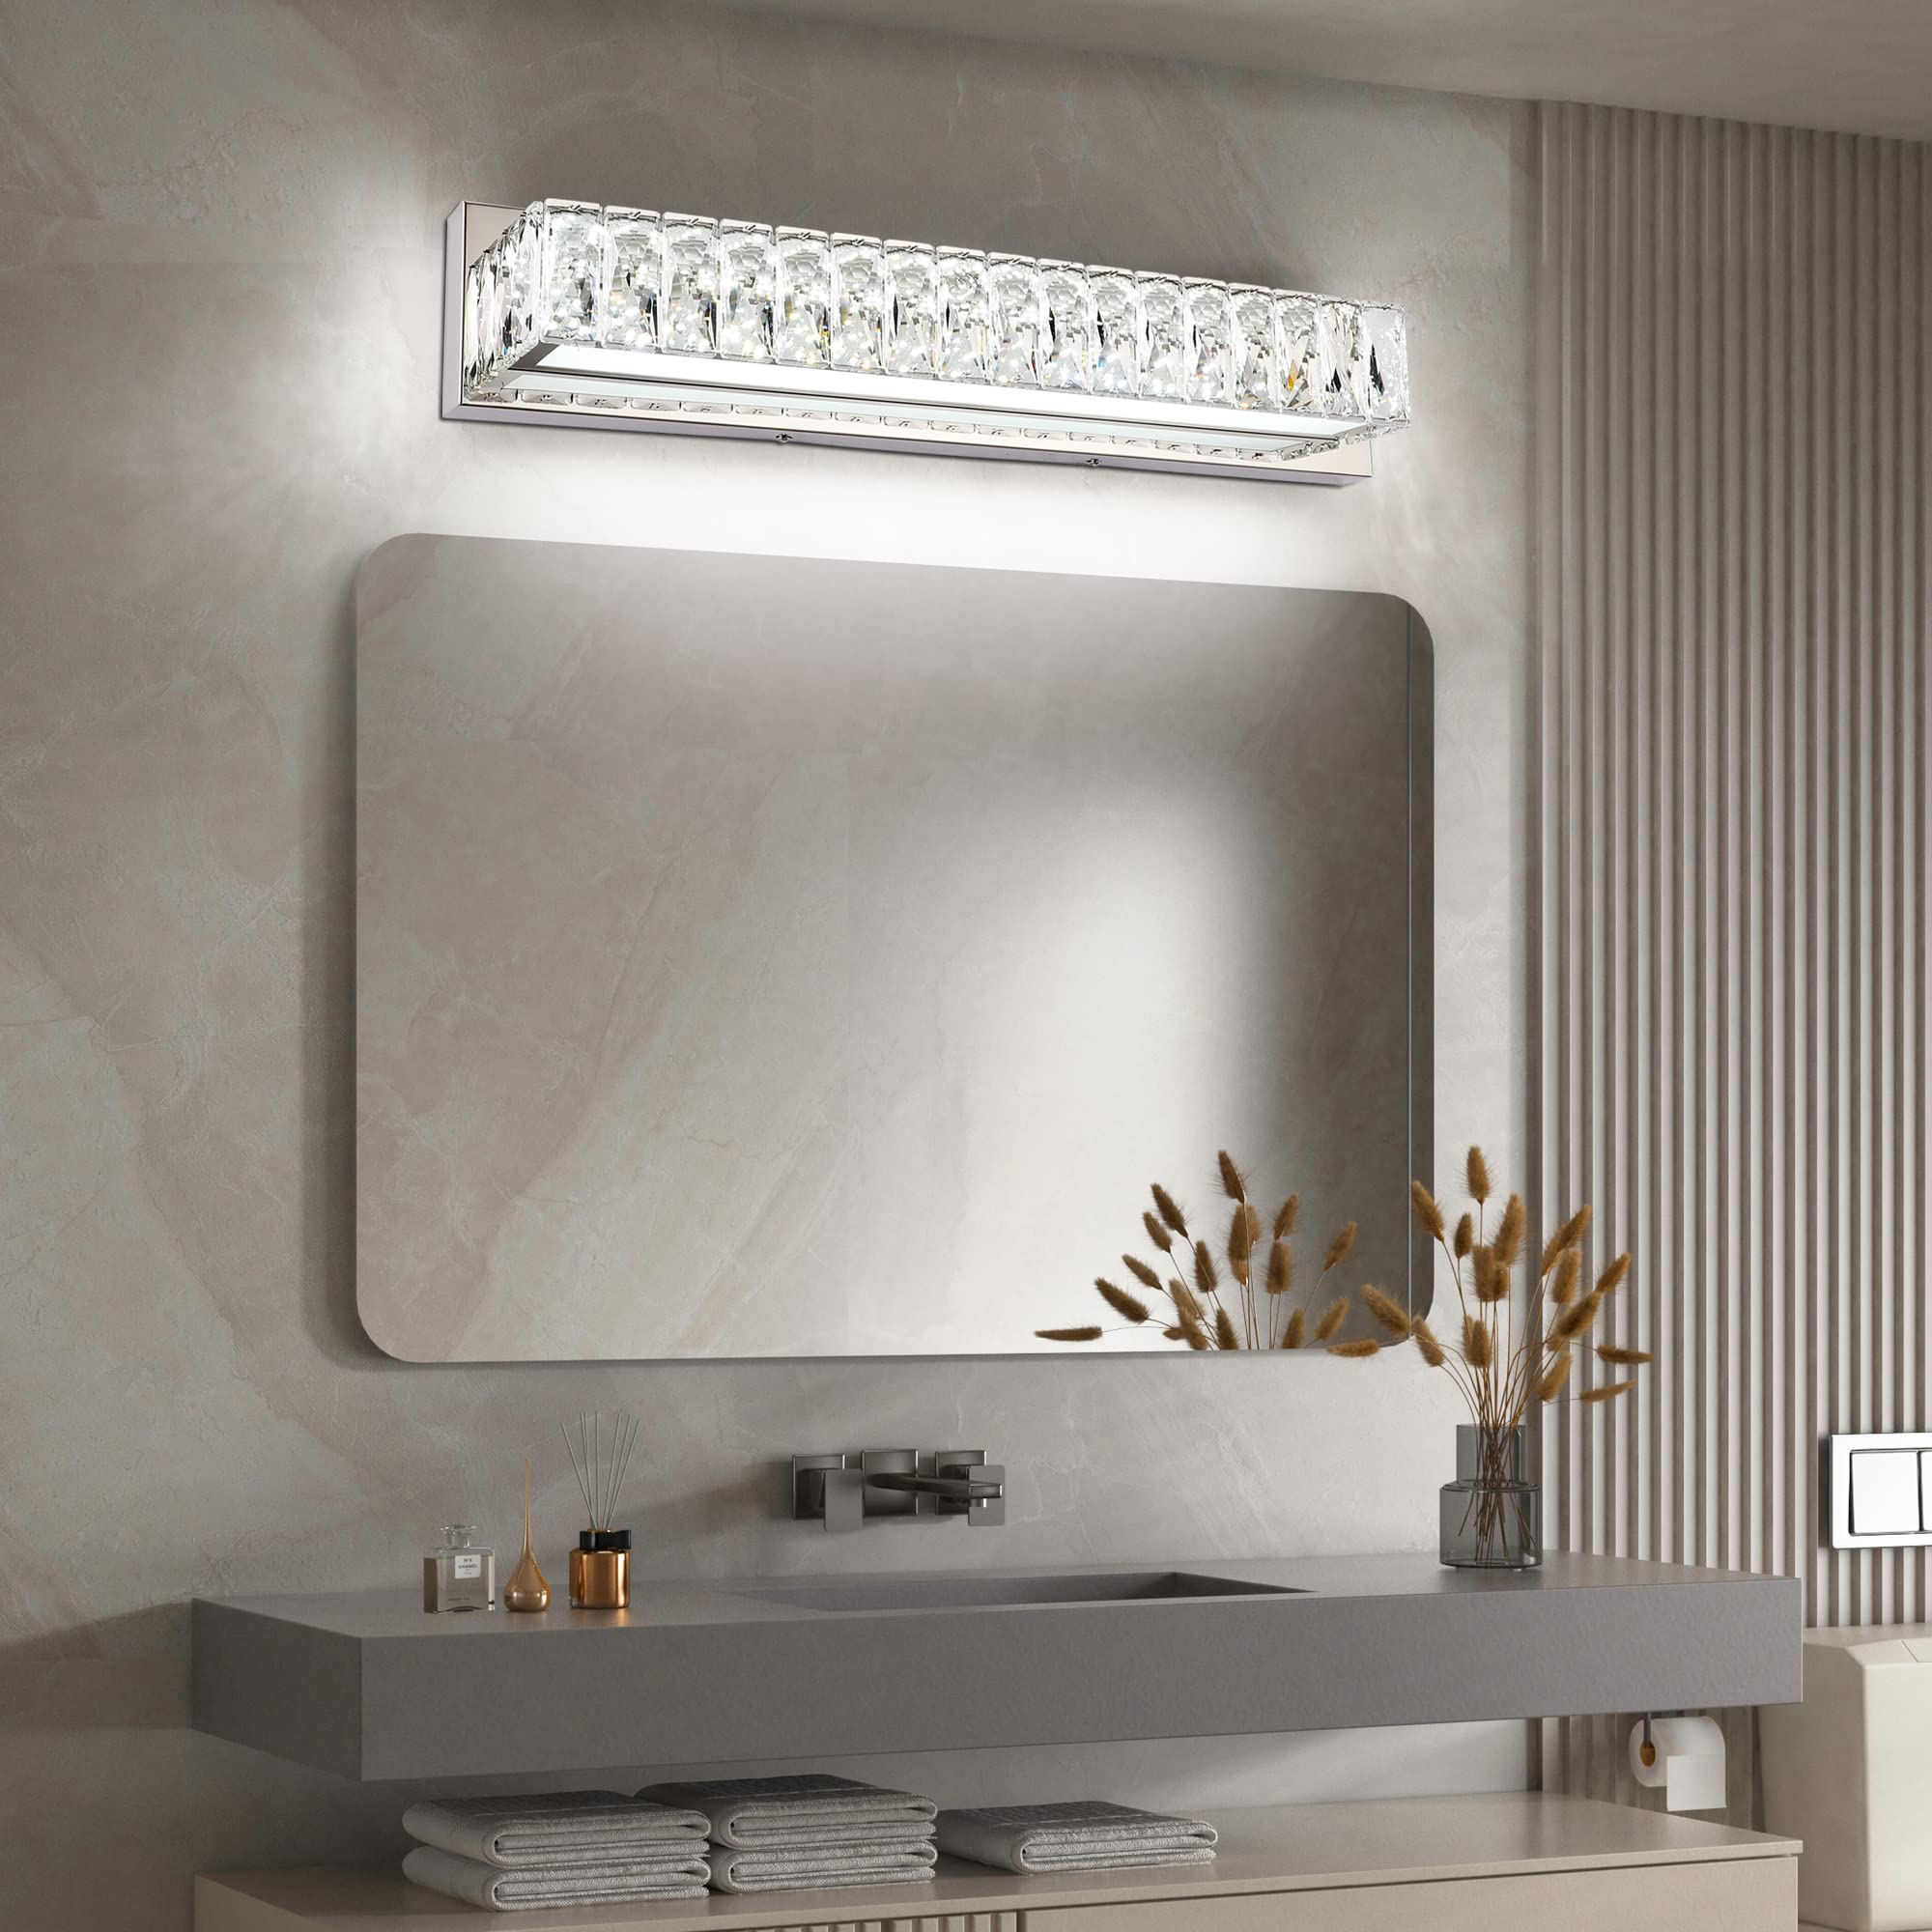 ZUZITO 30 inch LED Bathroom Crystal Vanity Lighting Fixtures Over Mirror Modern Bath Bar Lights Lamp White Light